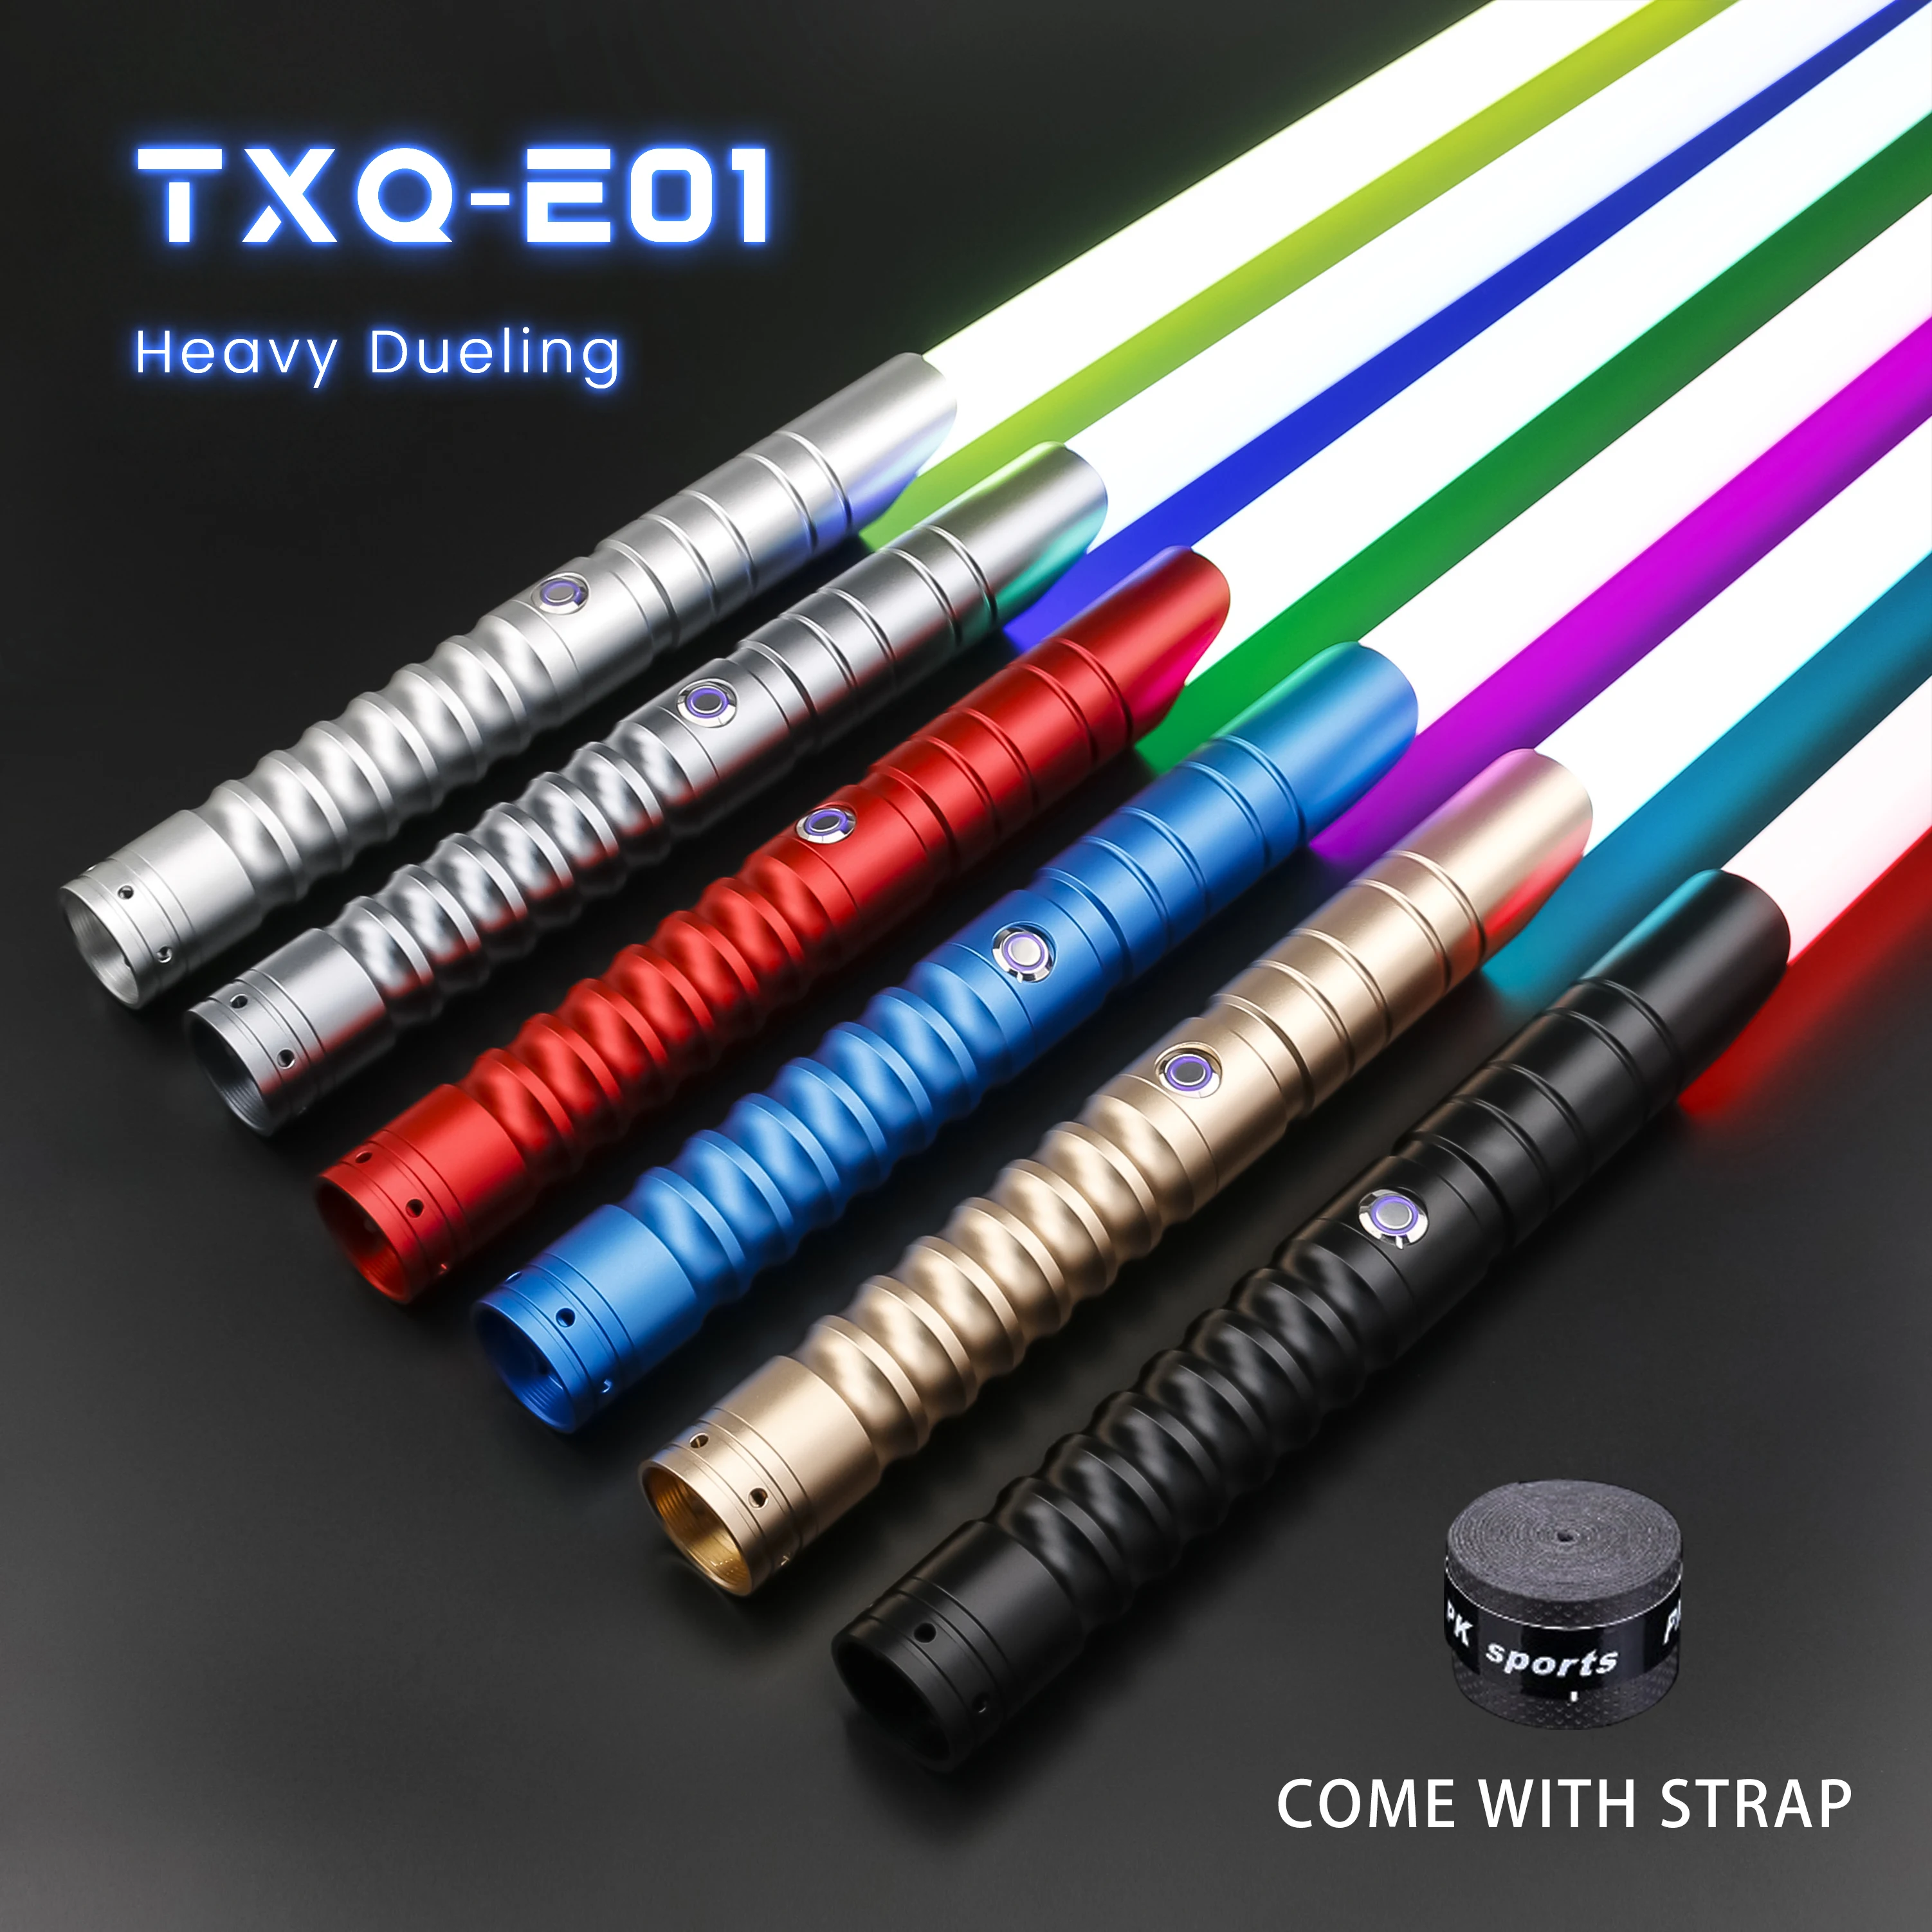 txqsaber-rgb-neo-pixel-lightsaber-swing-suave-duelo-pesado-treinamento-jedi-laser-sword-metal-hilt-12-colors-change-cosplay-toys